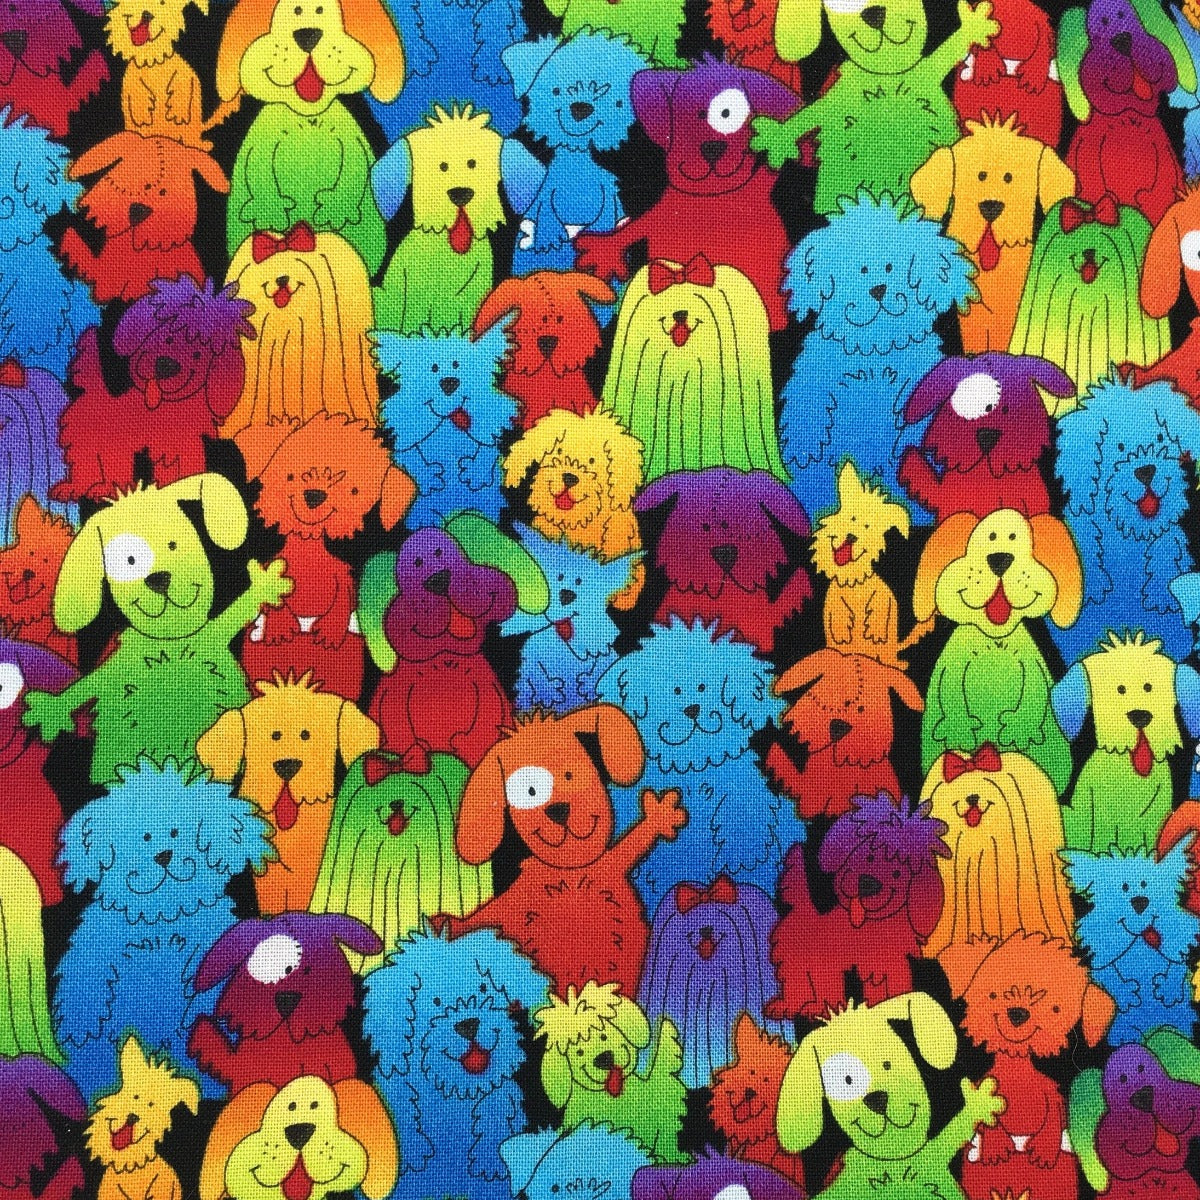 Dog fabric for apron